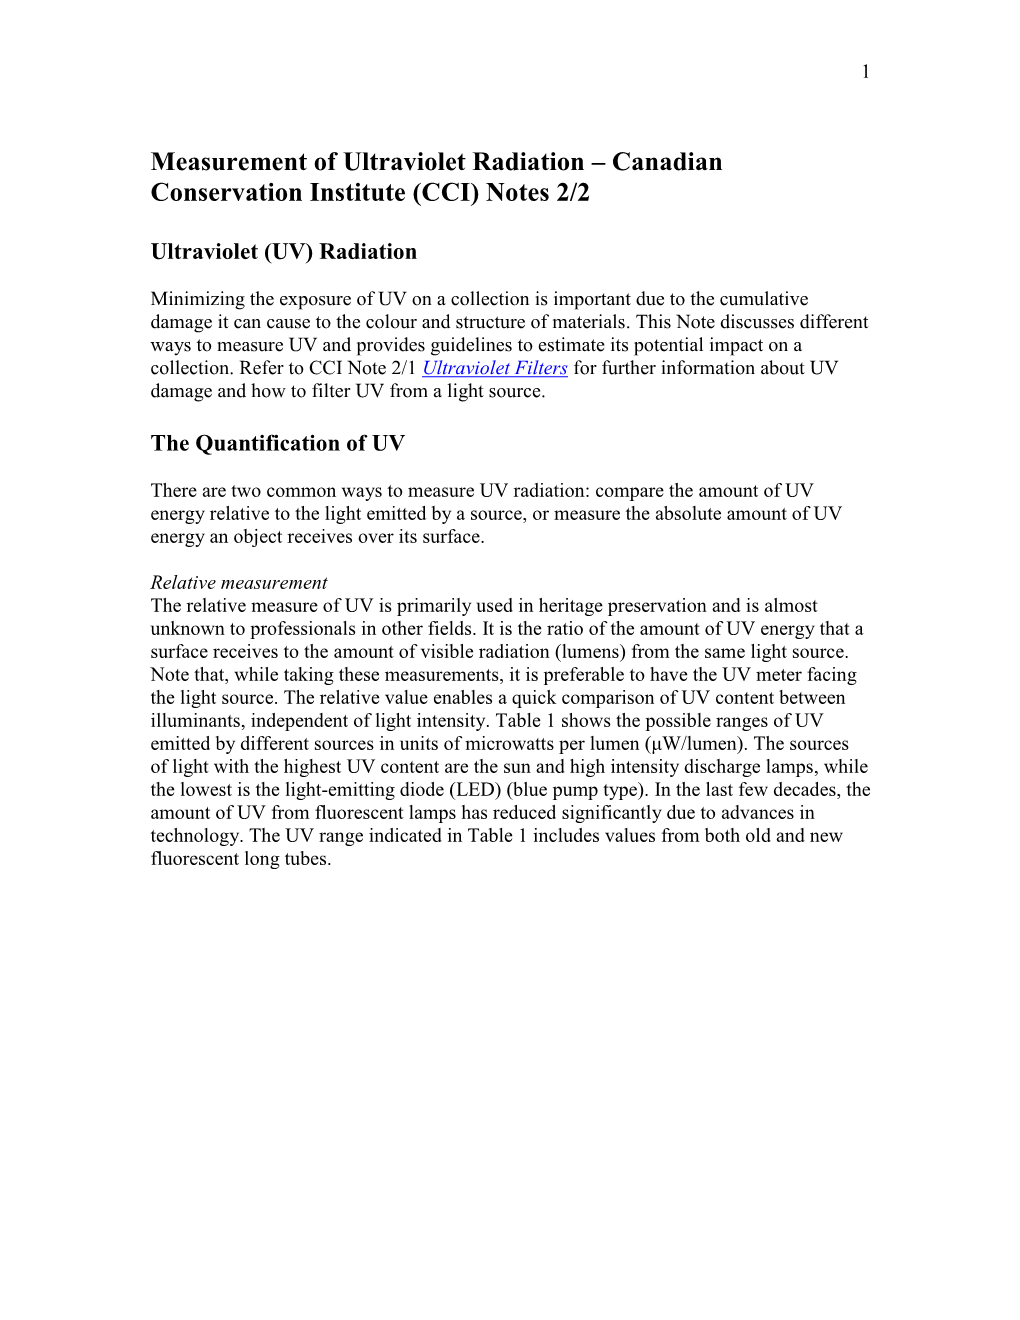 Measurement of Ultraviolet Radiation – Canadian Conservation Institute (CCI) Notes 2/2